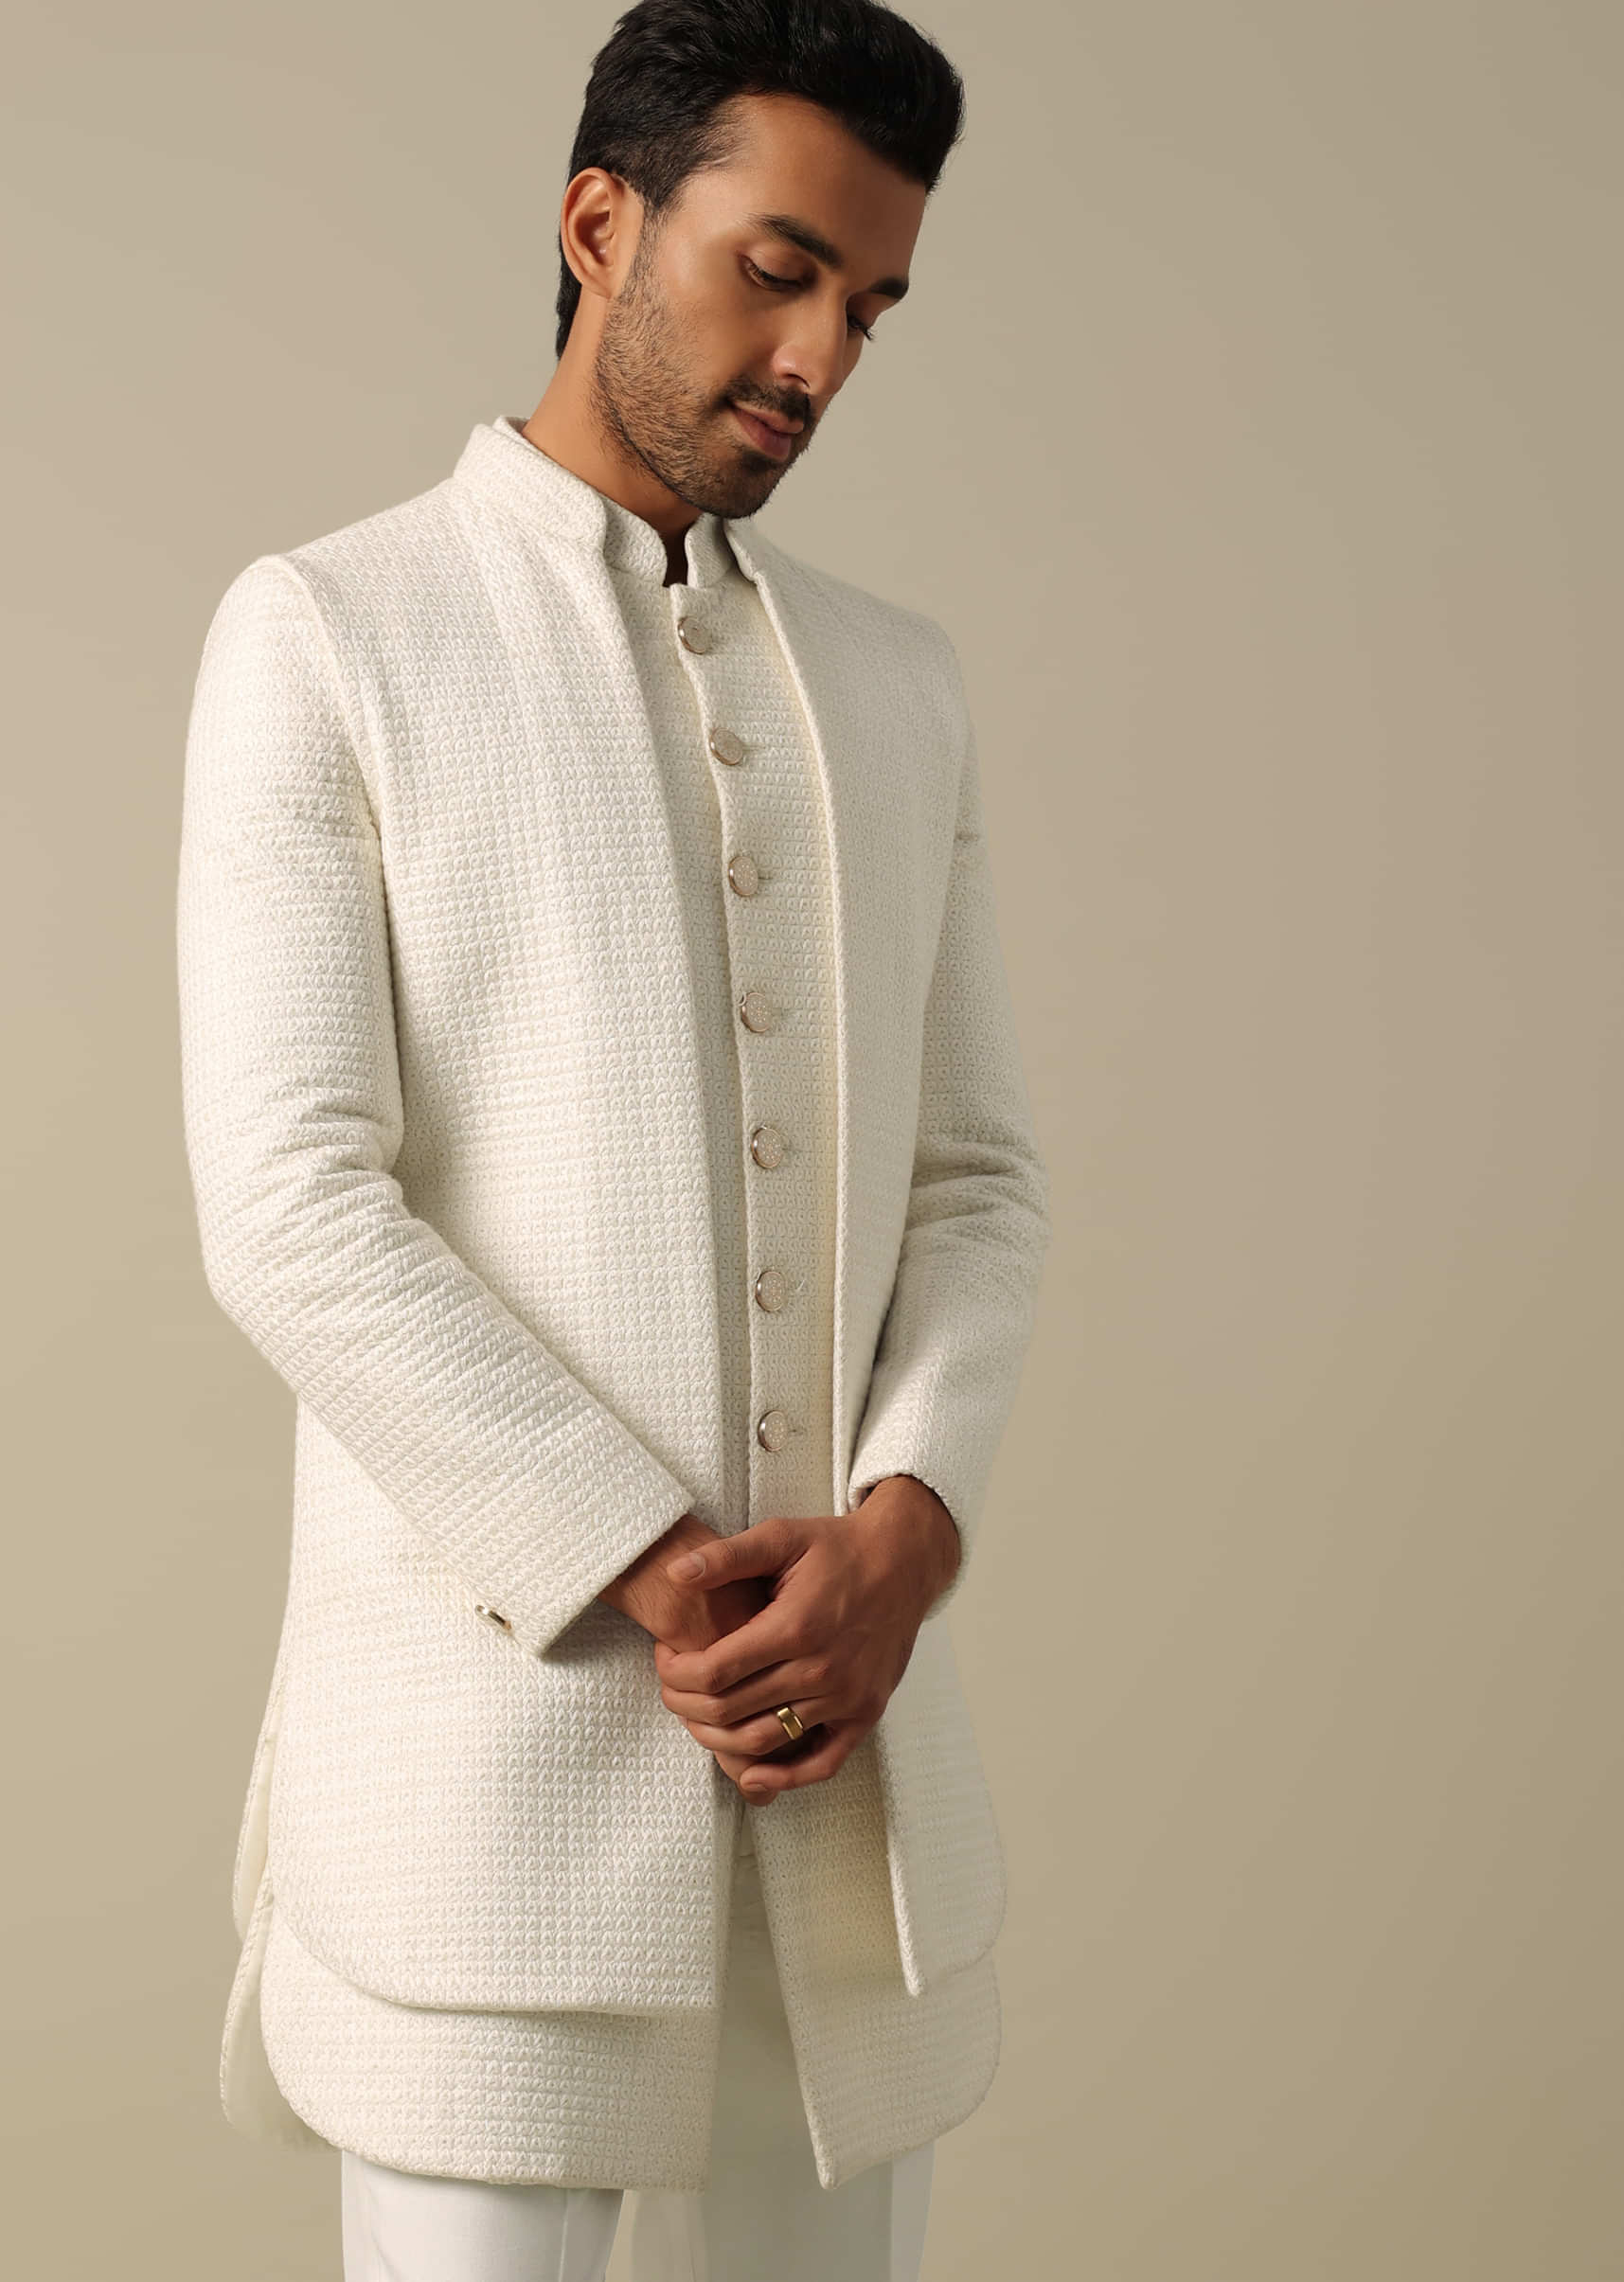 Wedding Dress For Men - Buy Wedding Dress For Men online in India